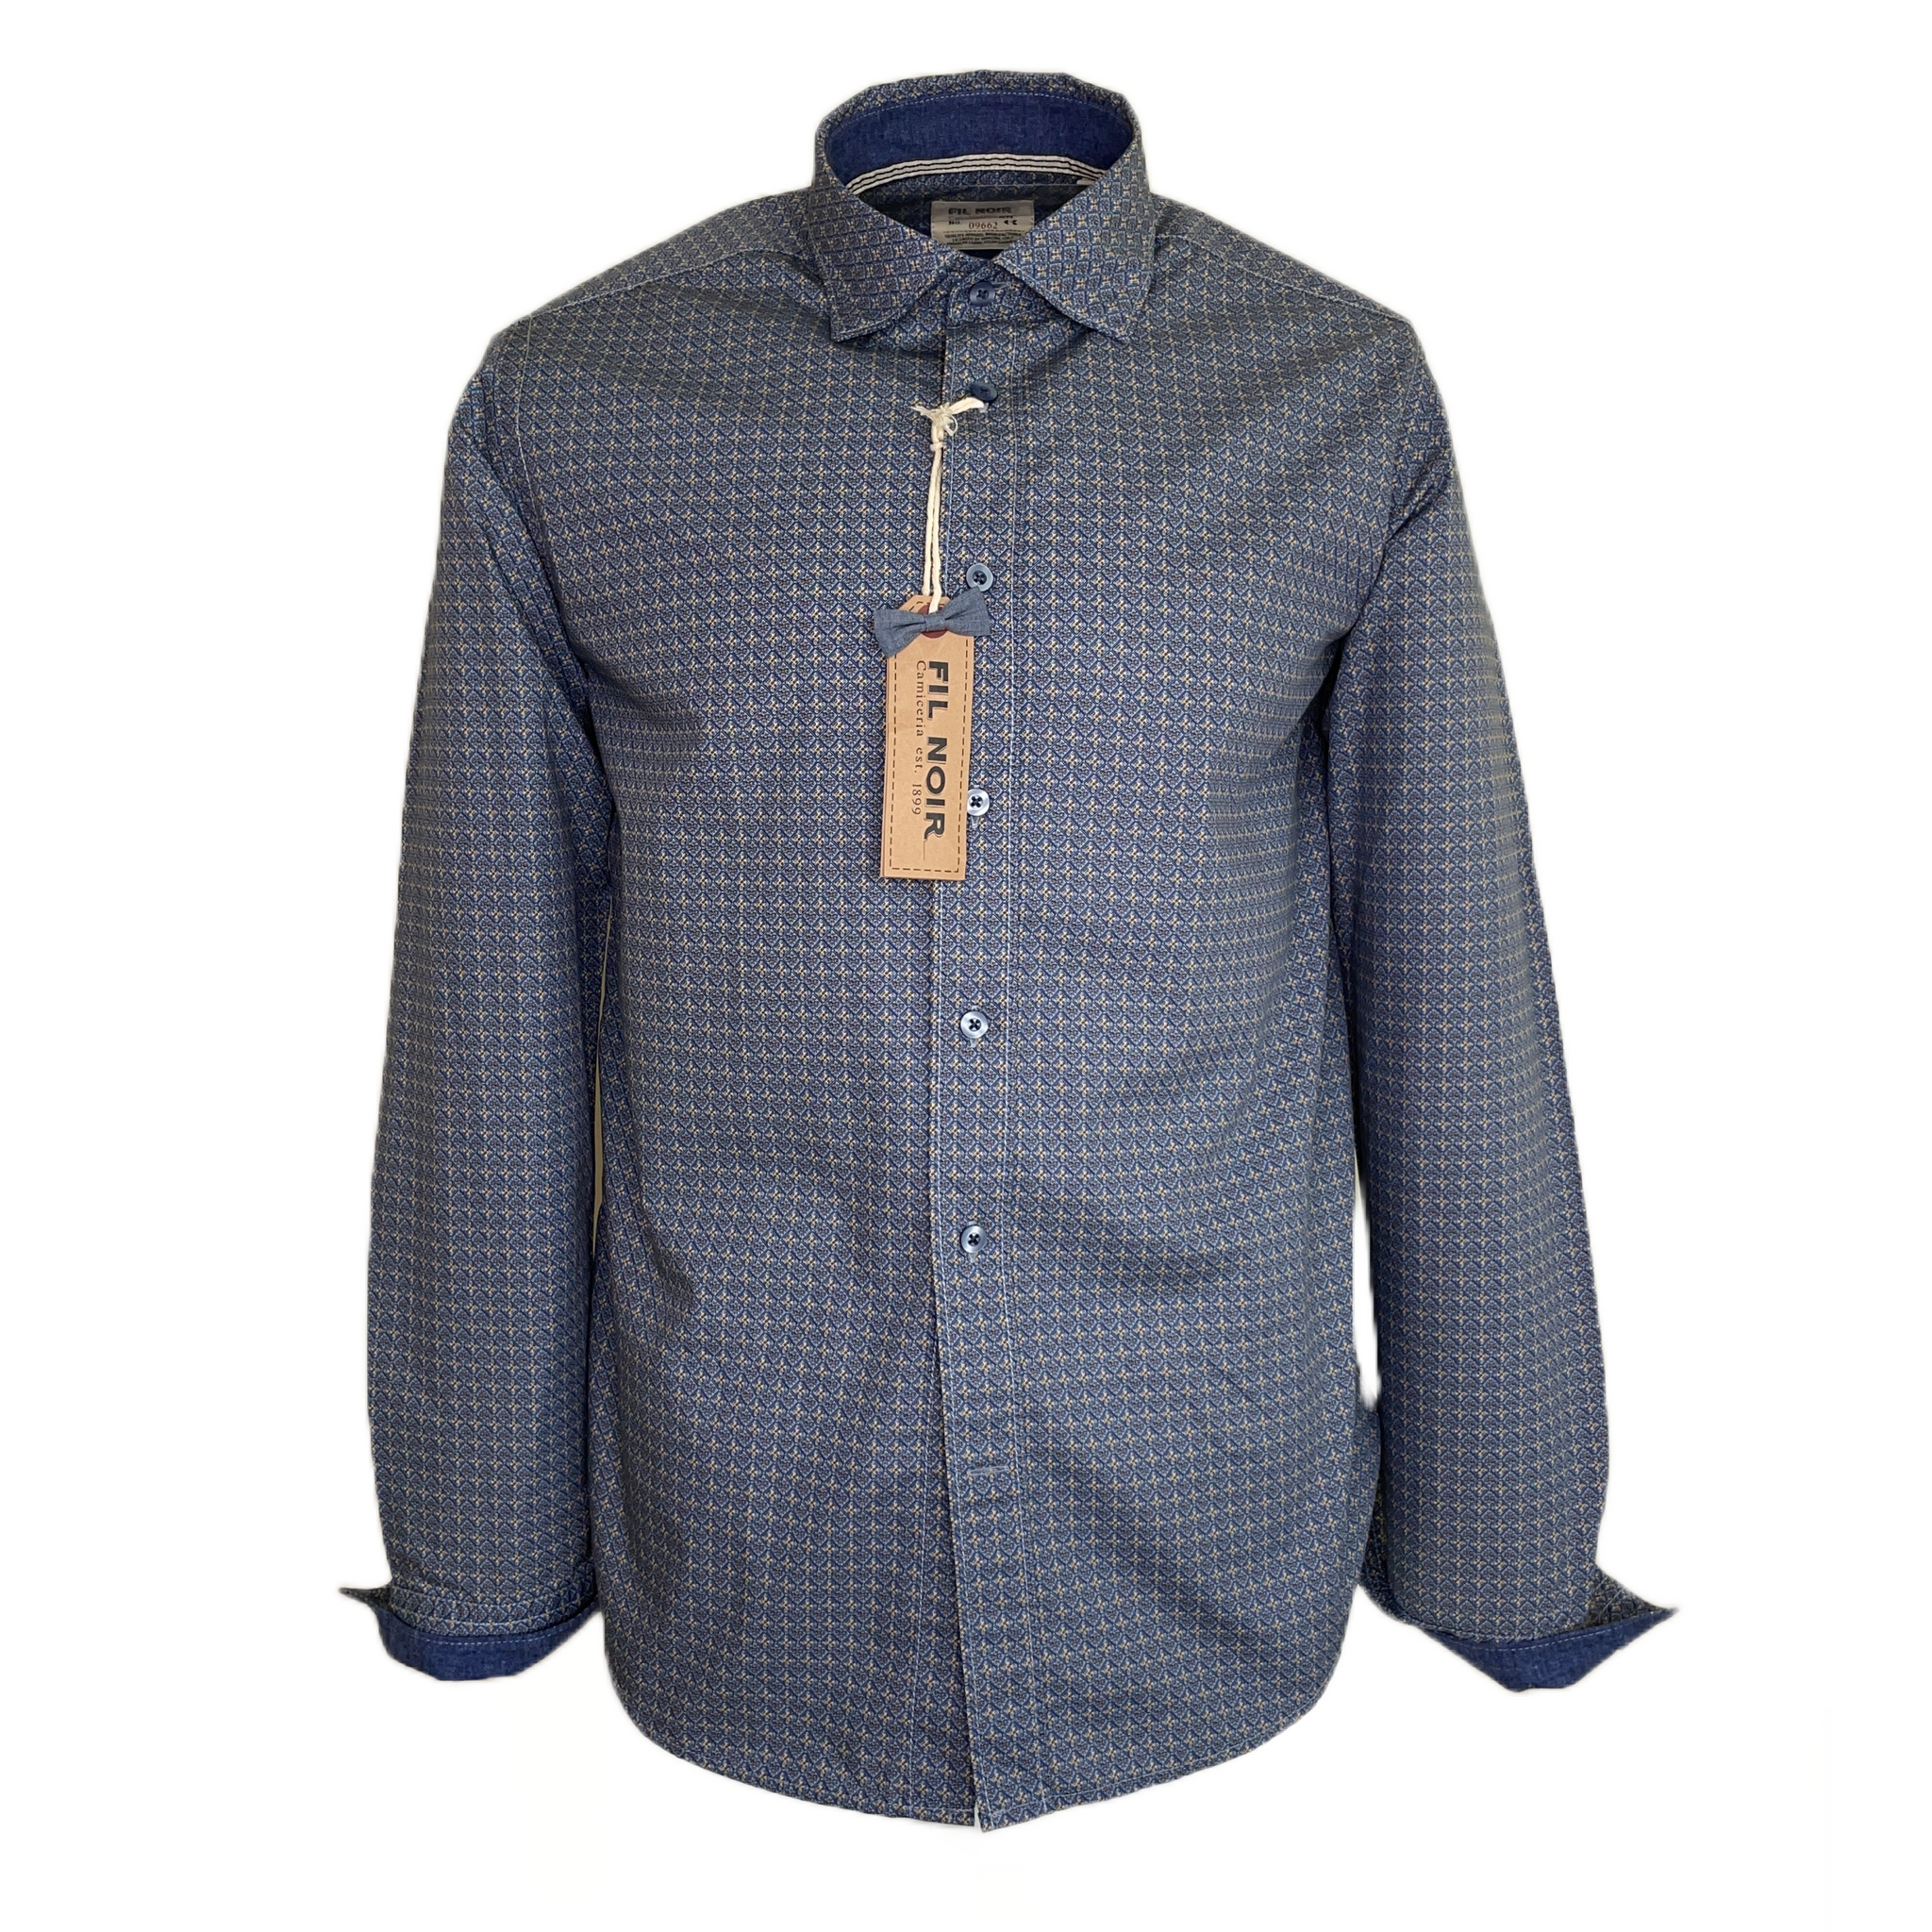 Fil Noir Blue & Tan Diamond Print Long Sleeve Shirt (51 783 67)